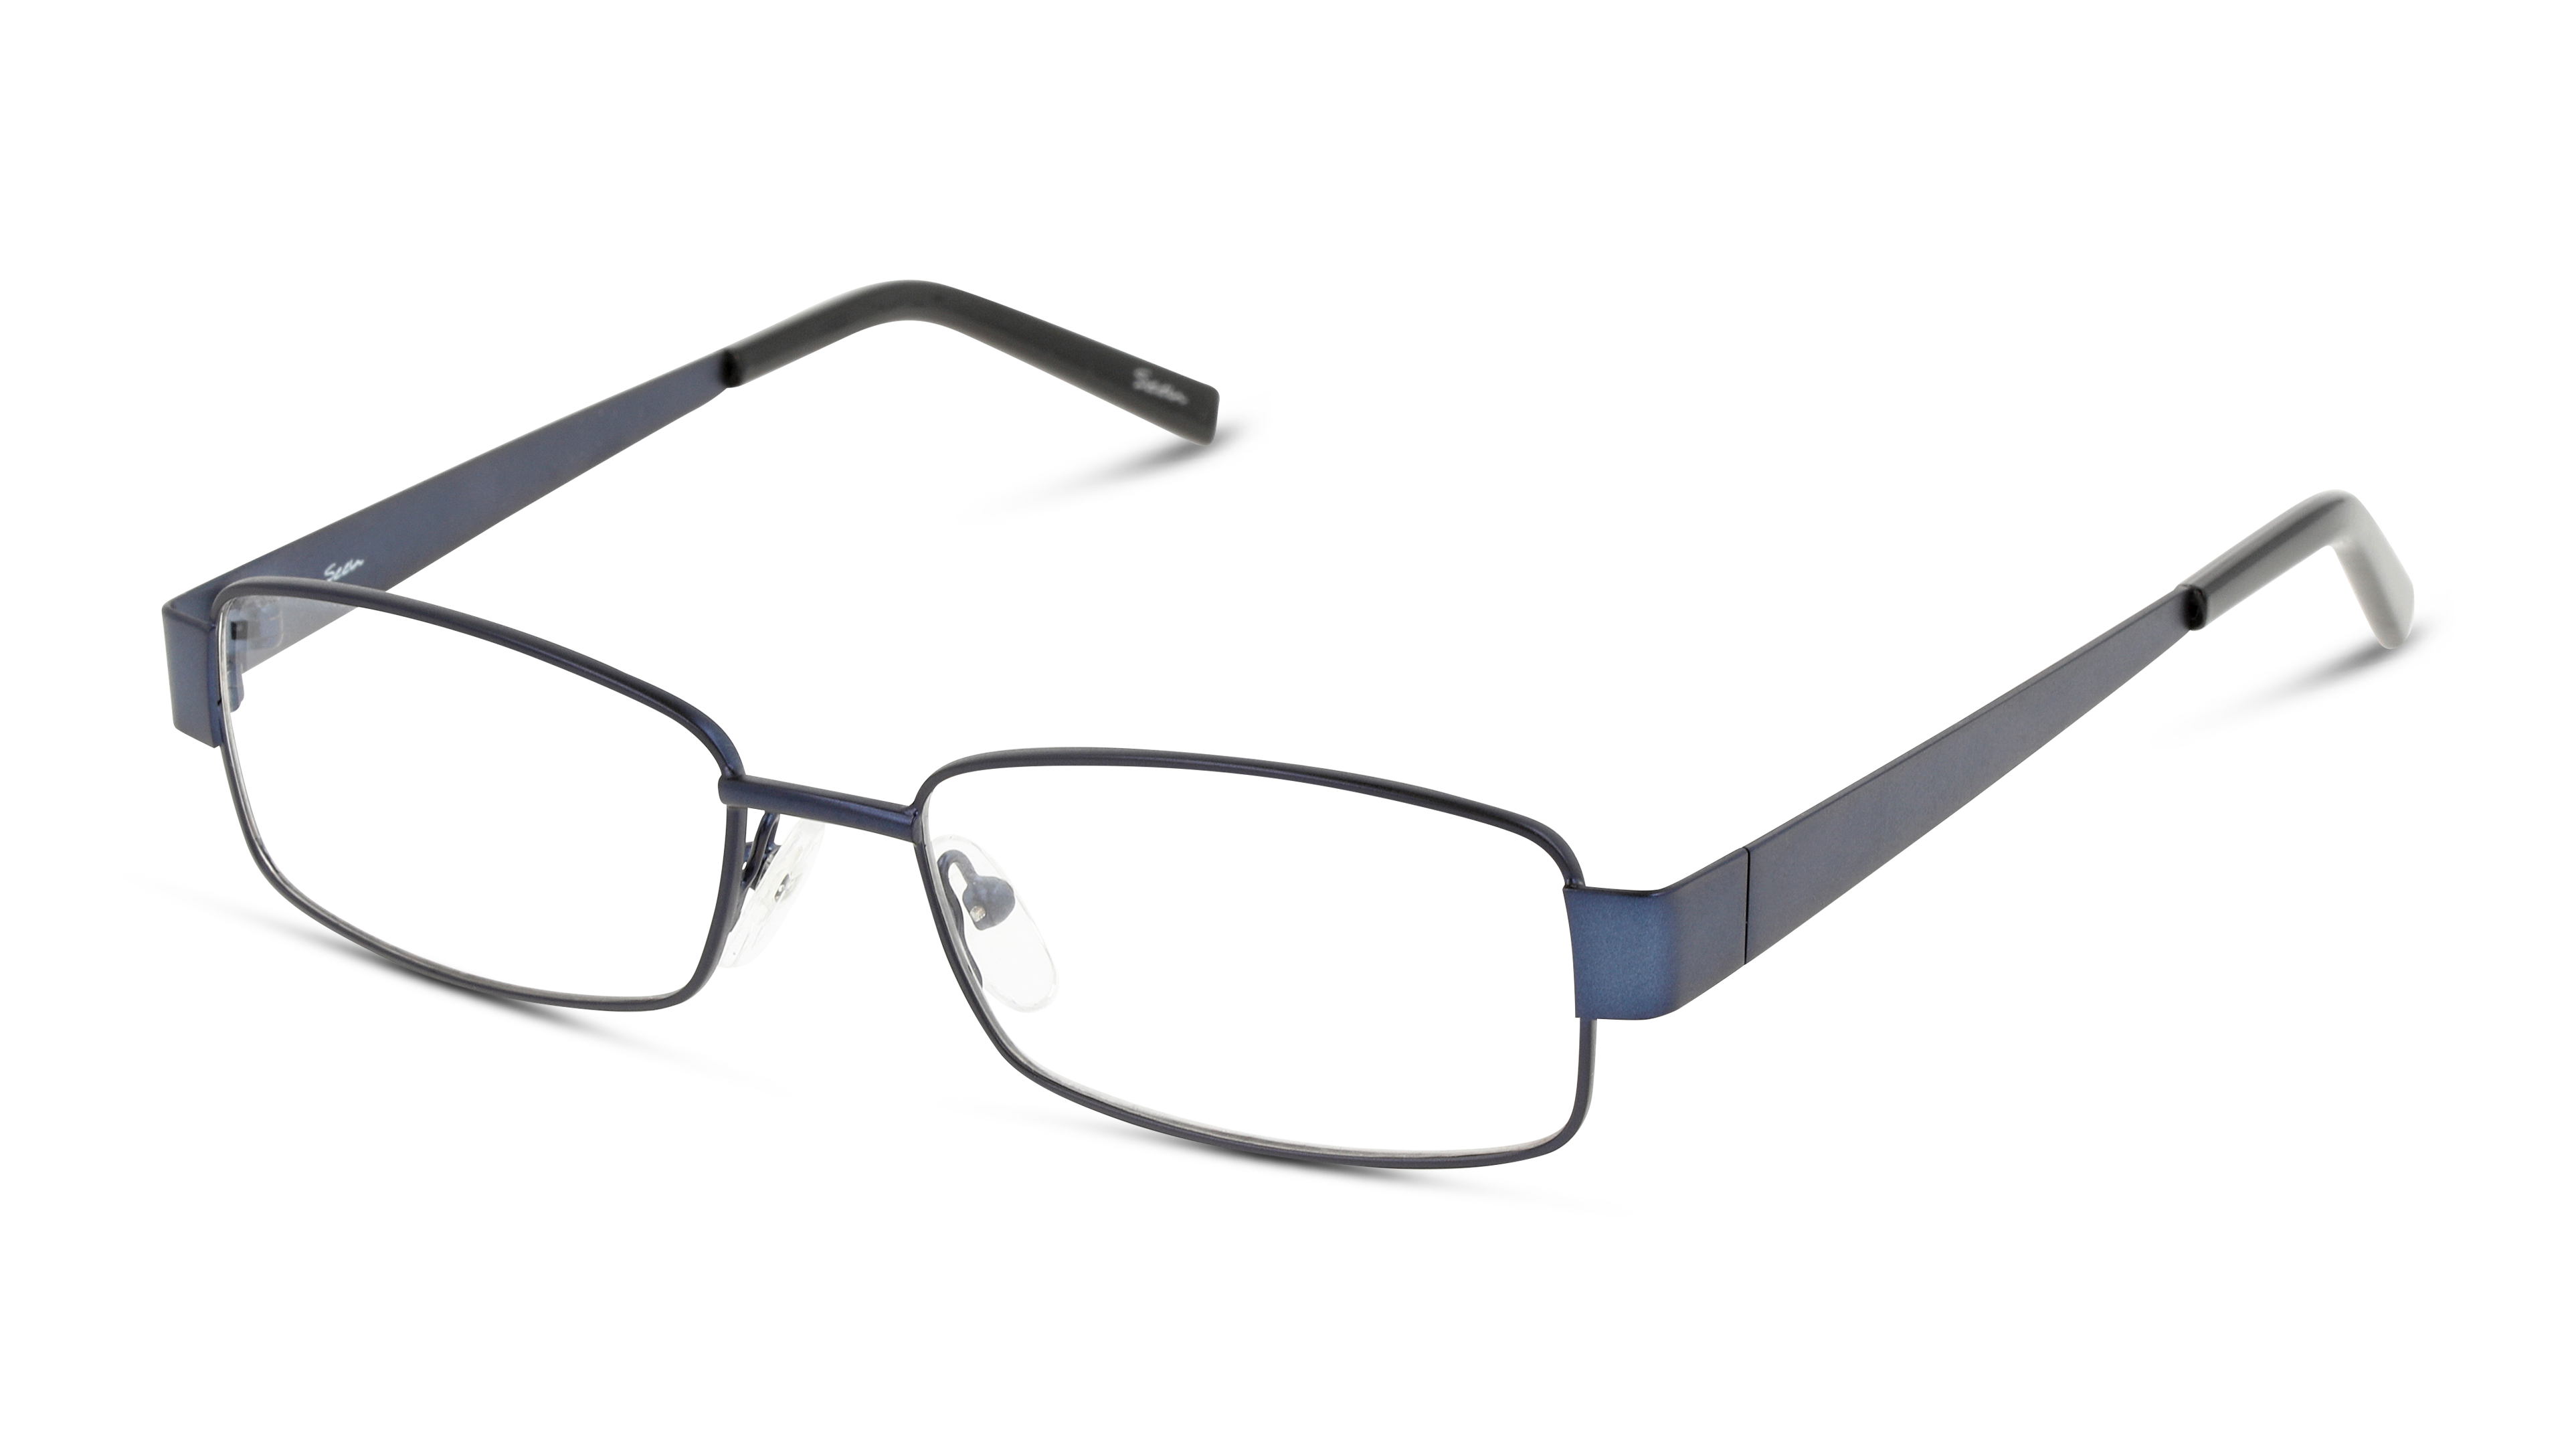 Angle_Left01 Seen SN AM13 (Large) Glasses Transparent / Blue